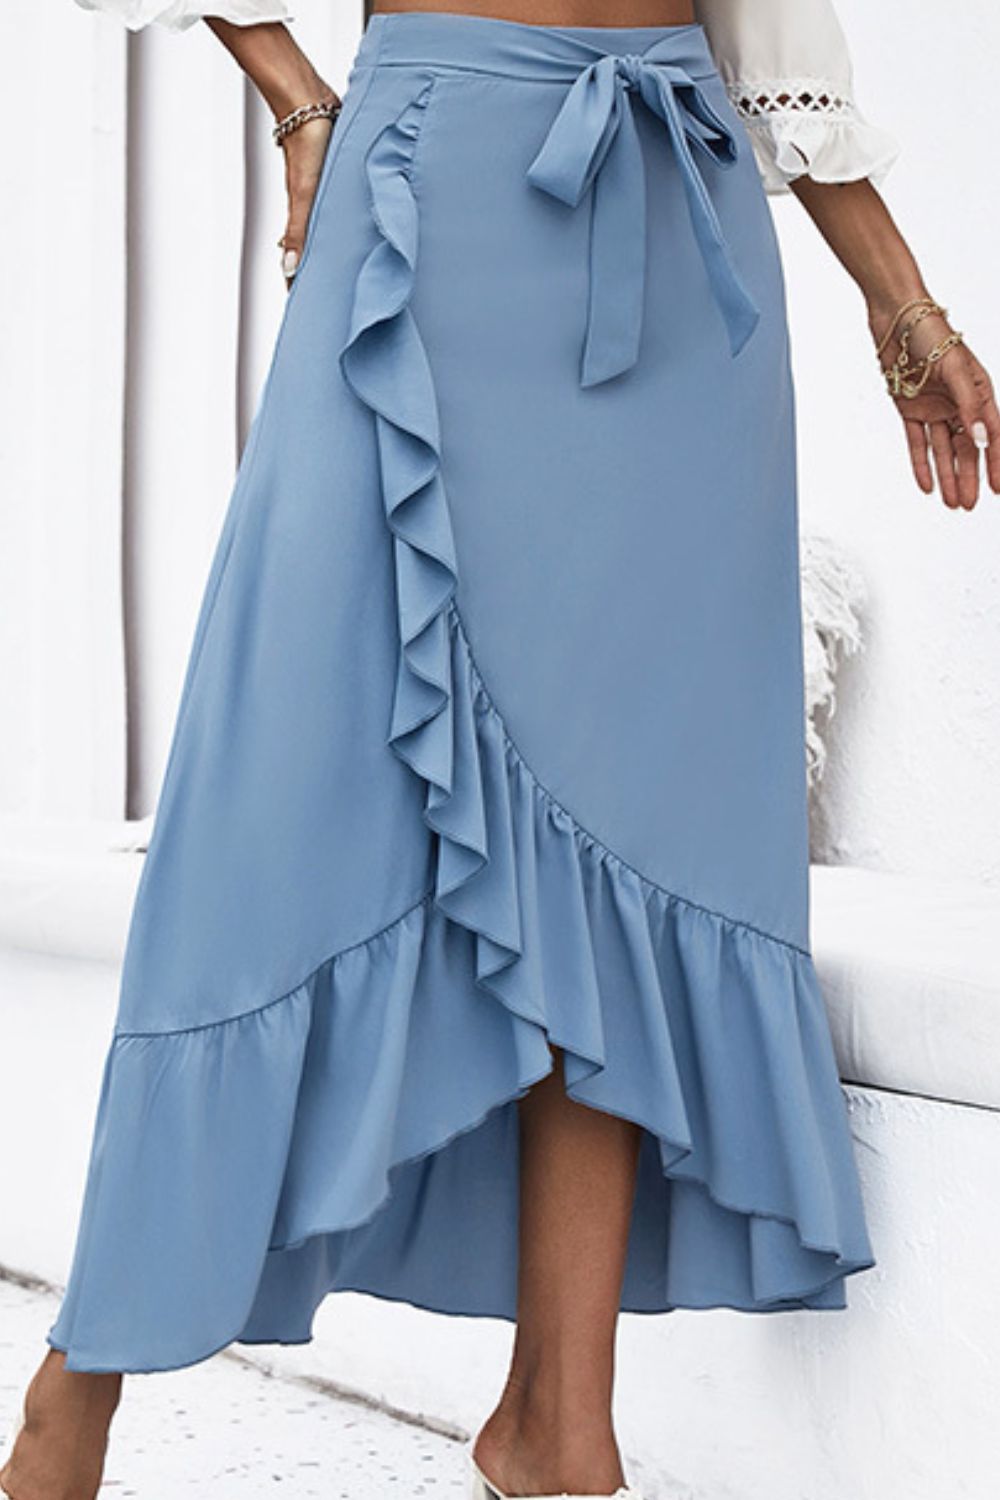 Flatter Me Ruffle Trimmed Midi Skirt with Waist Tie in Blue - Bit of Swank